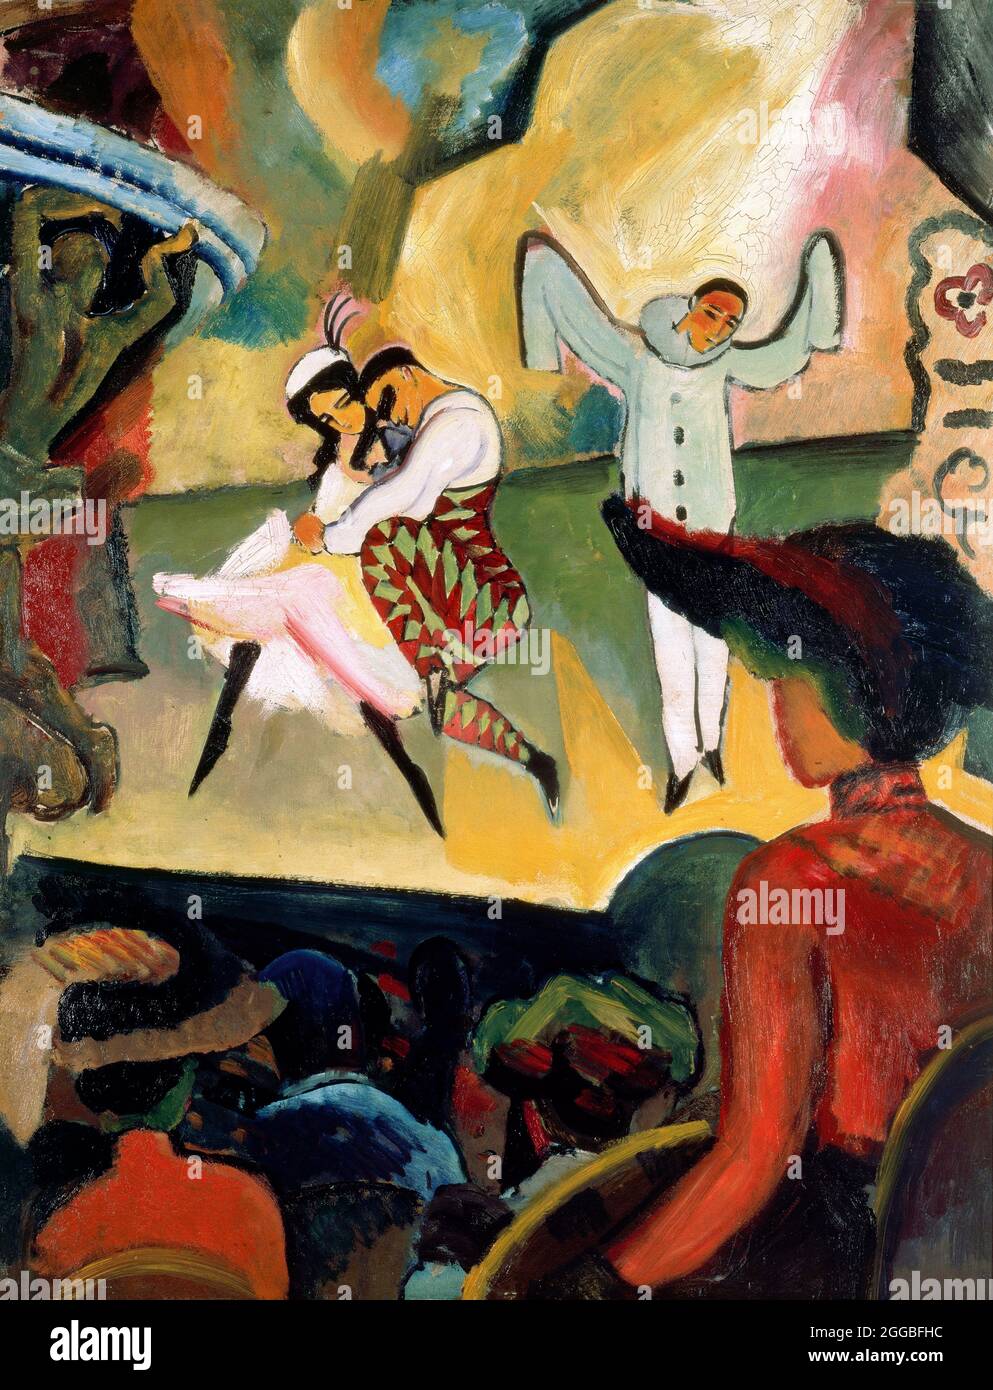 Ballet Russes i del pittore espressionista tedesco, August Macke (1887-1914), olio su cartone, 1912 Foto Stock